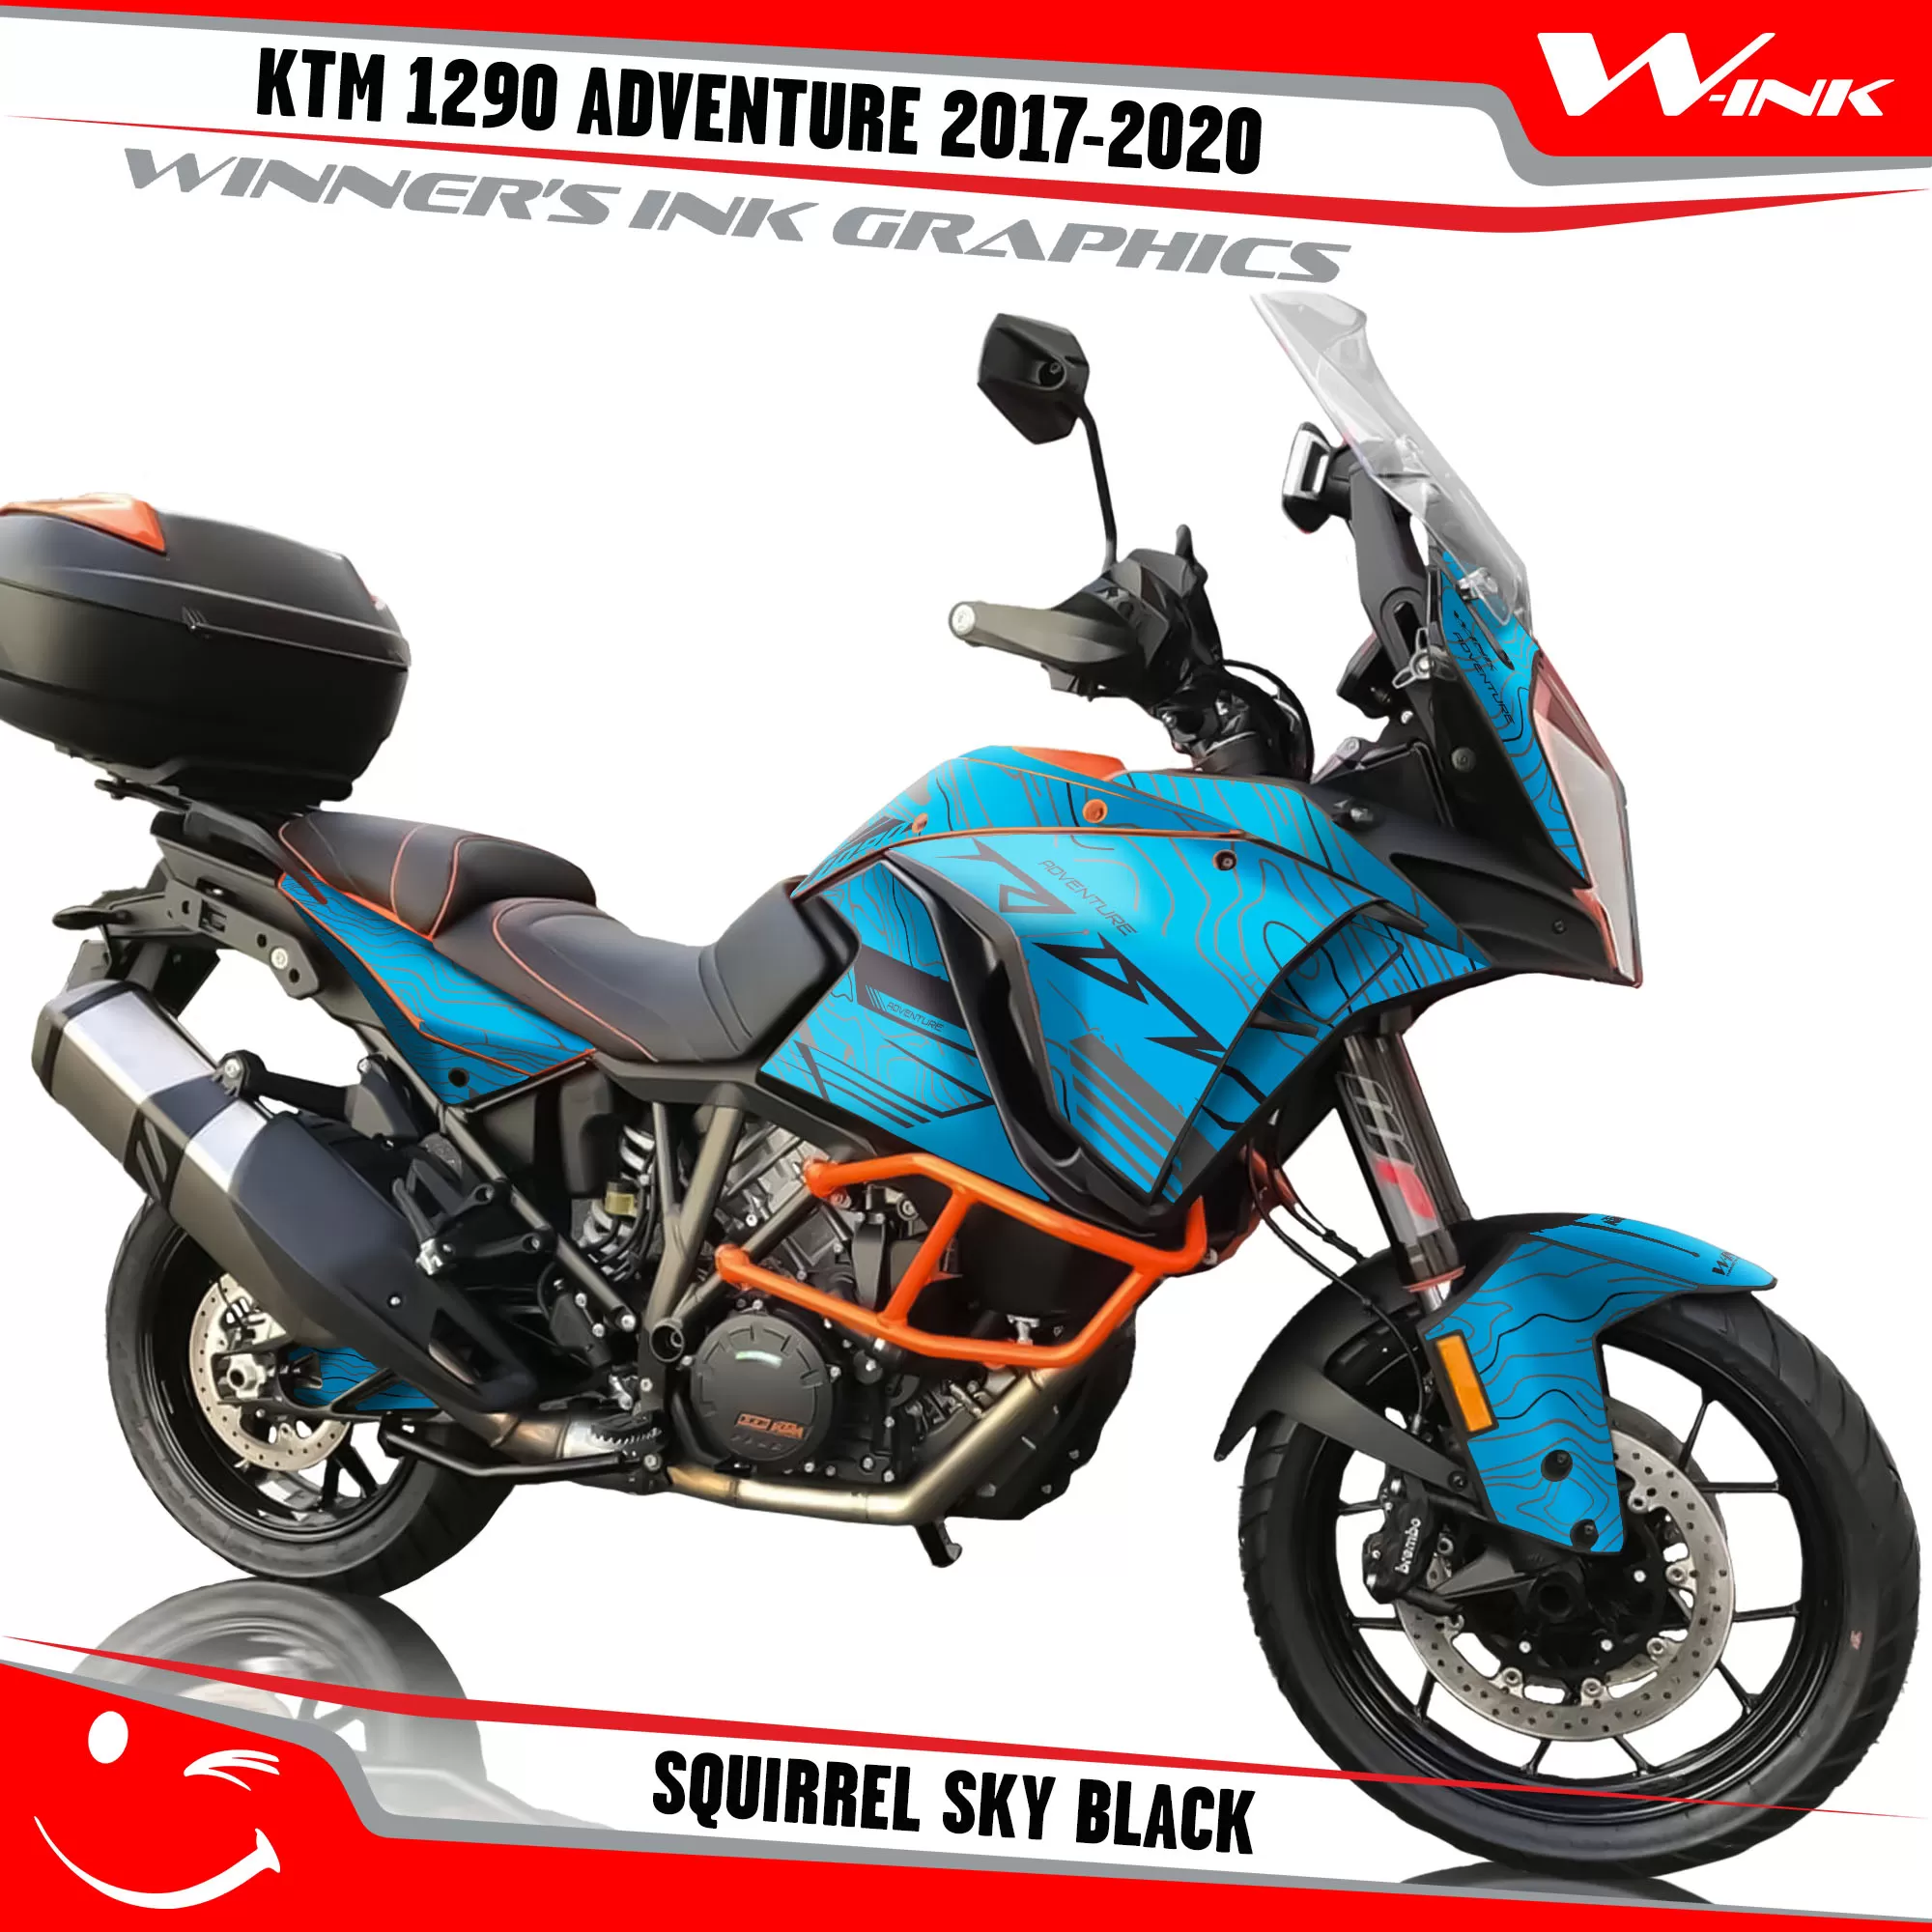 KTM-Adventure-1290-2017-2018-2019-2020-graphics-kit-and-decals-Squirrel-Sky-Black